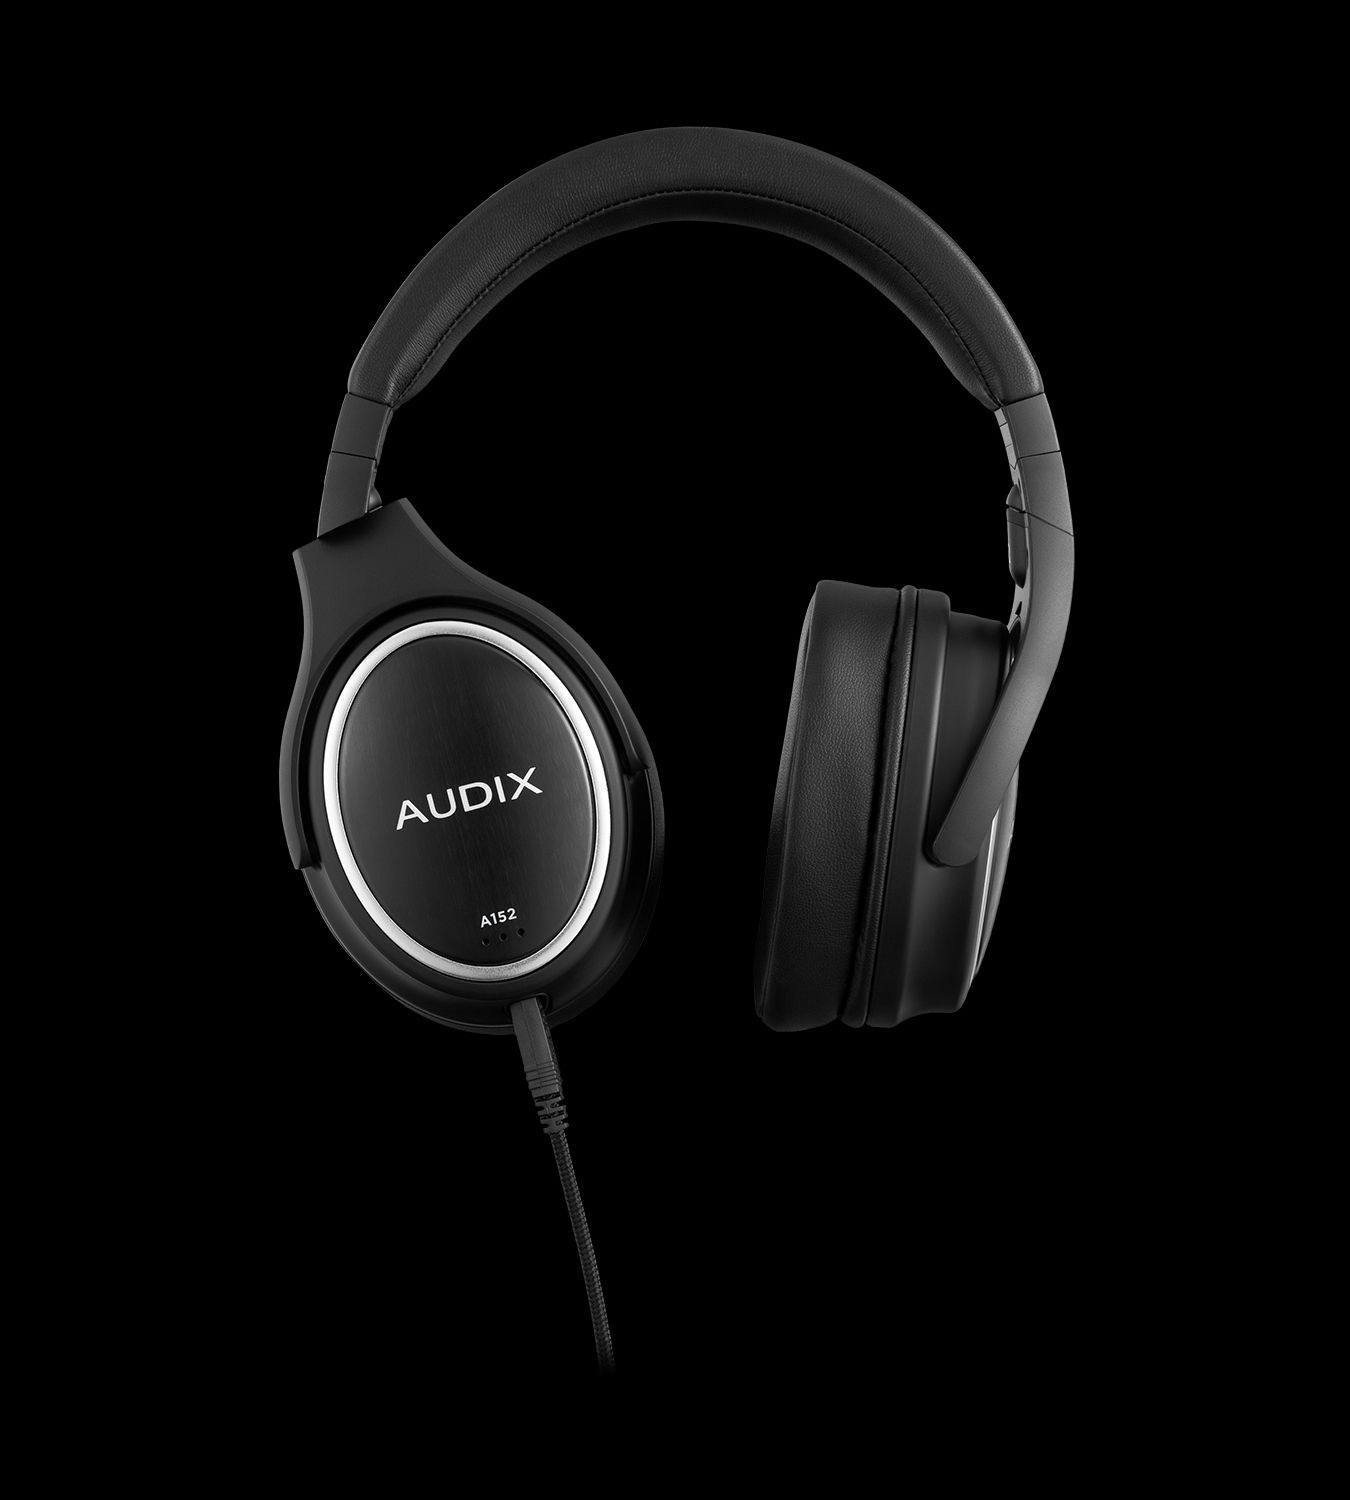 Audix A152 Professioneller geschlossener Studio-Referenz-Kopfhörer mit Bassboost